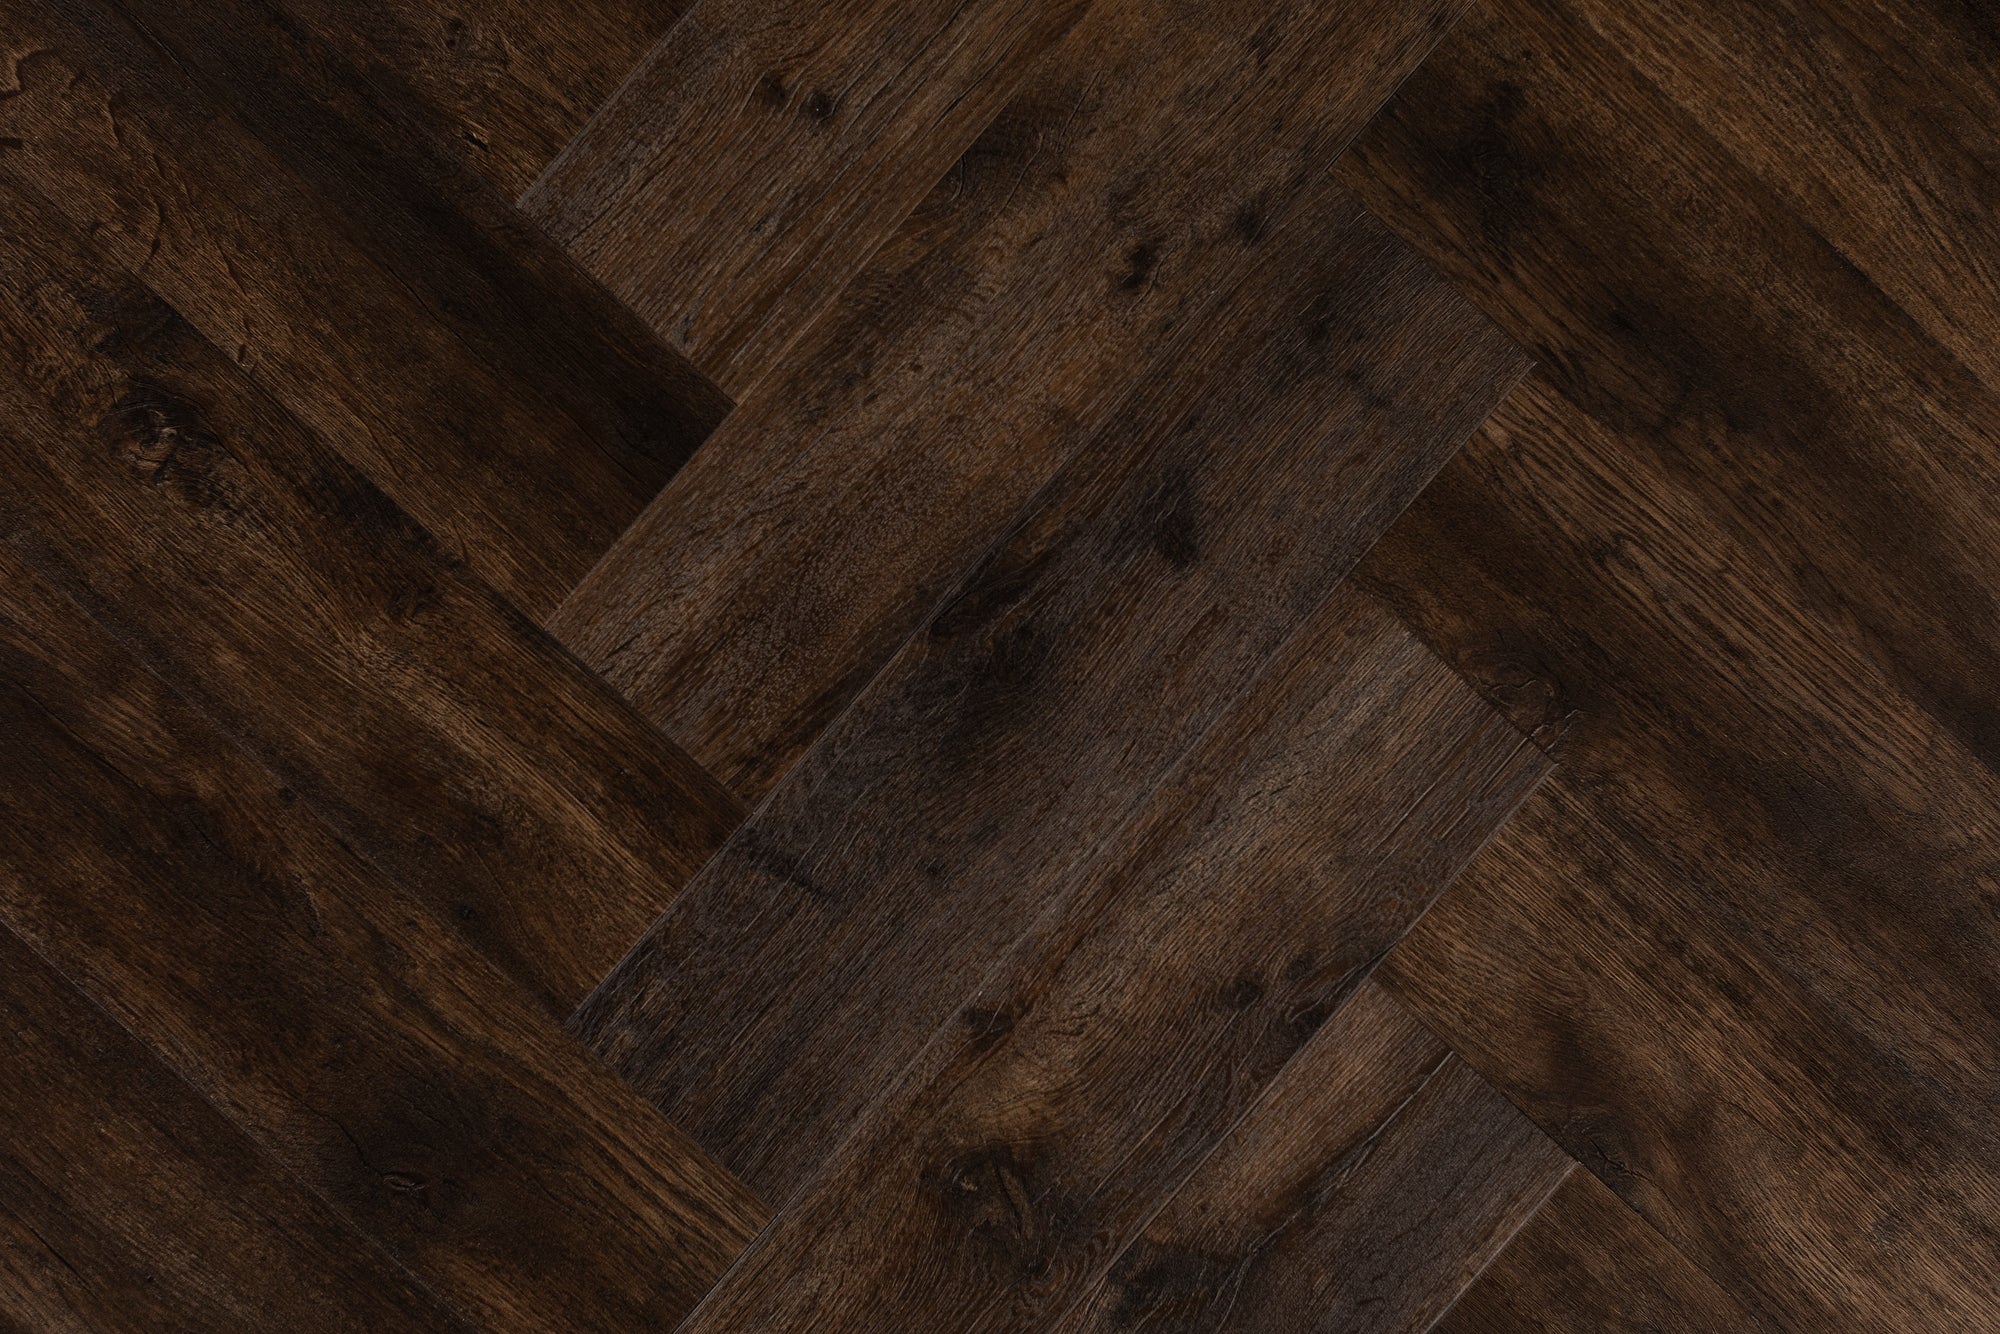 Burnt Cocoa Glue Down Herringbone parquet hardwood flooring from our Vinyl Flooring collection